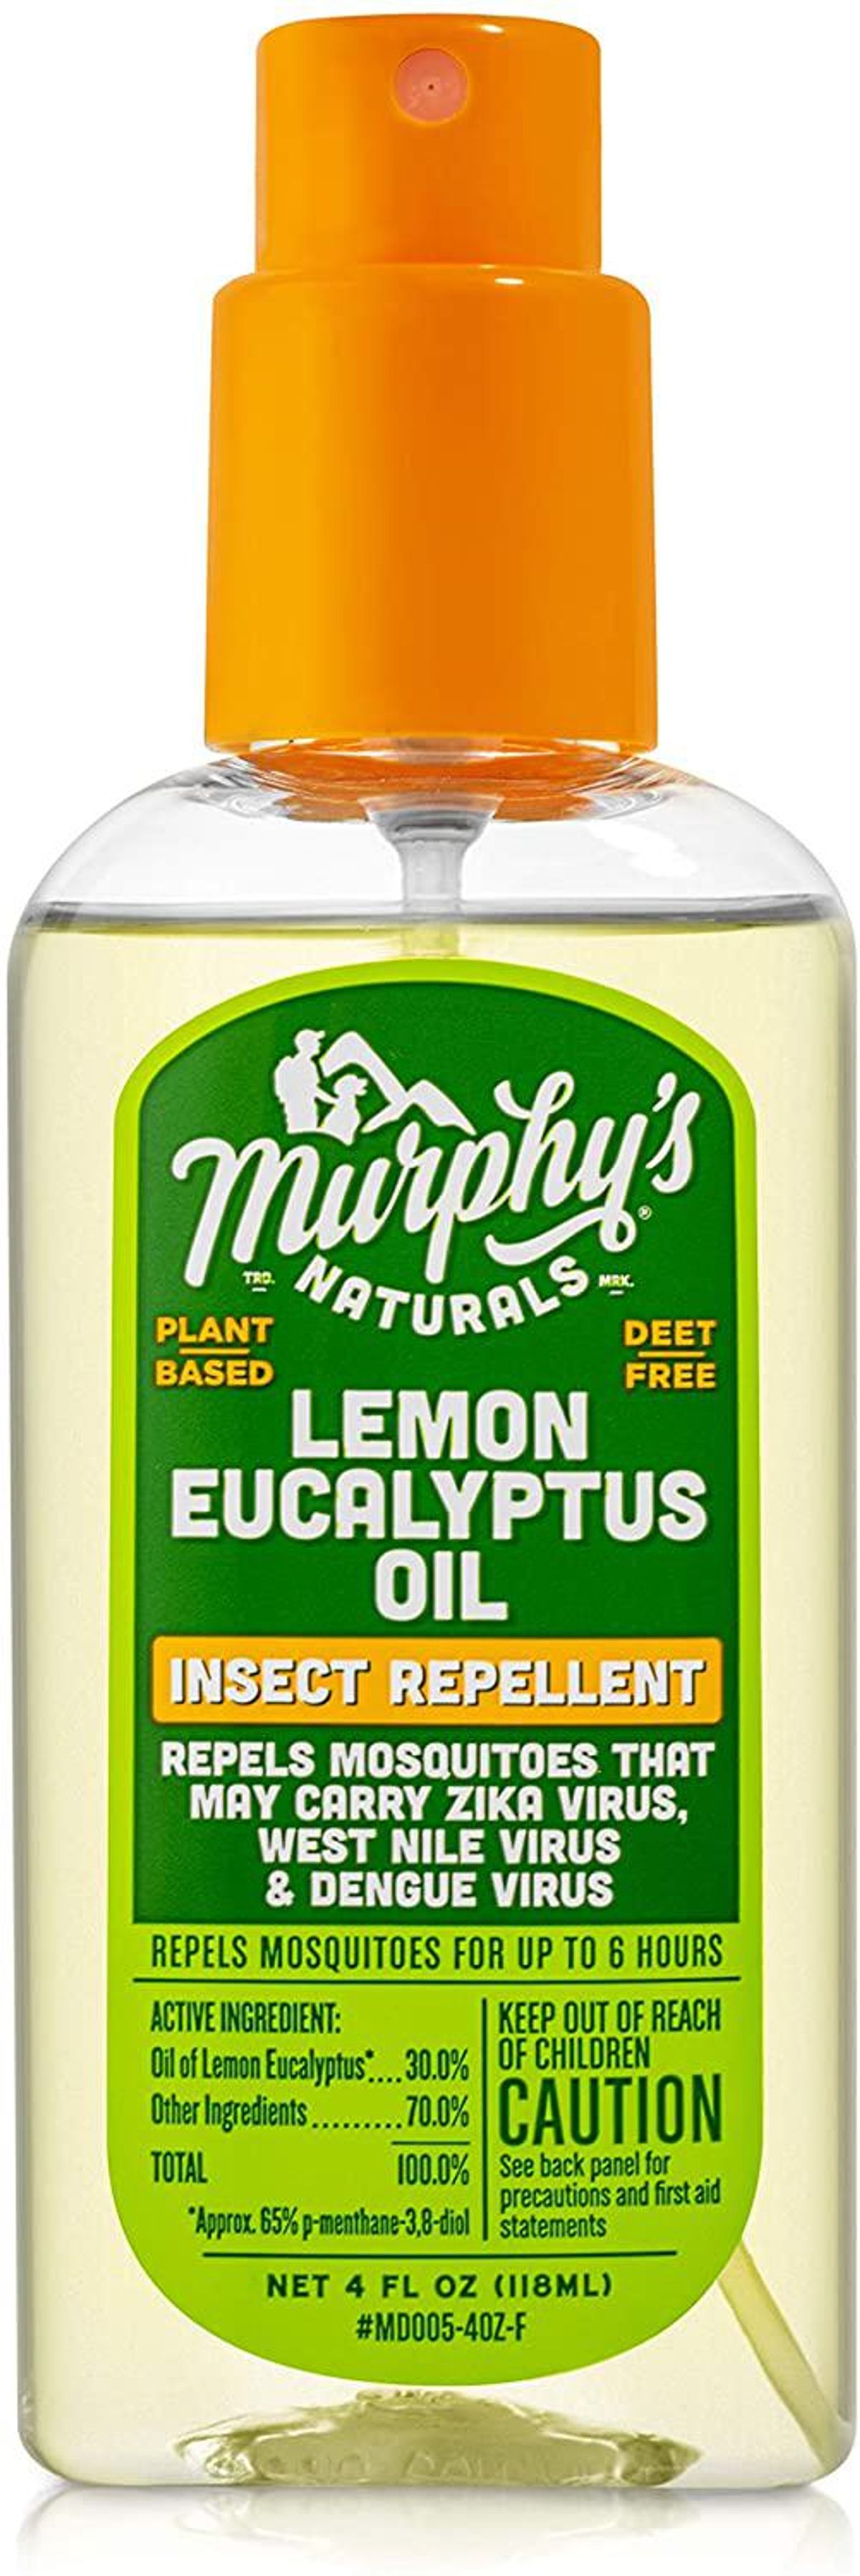 murphys naturals lemon eucalyptus oil insect repellent spray